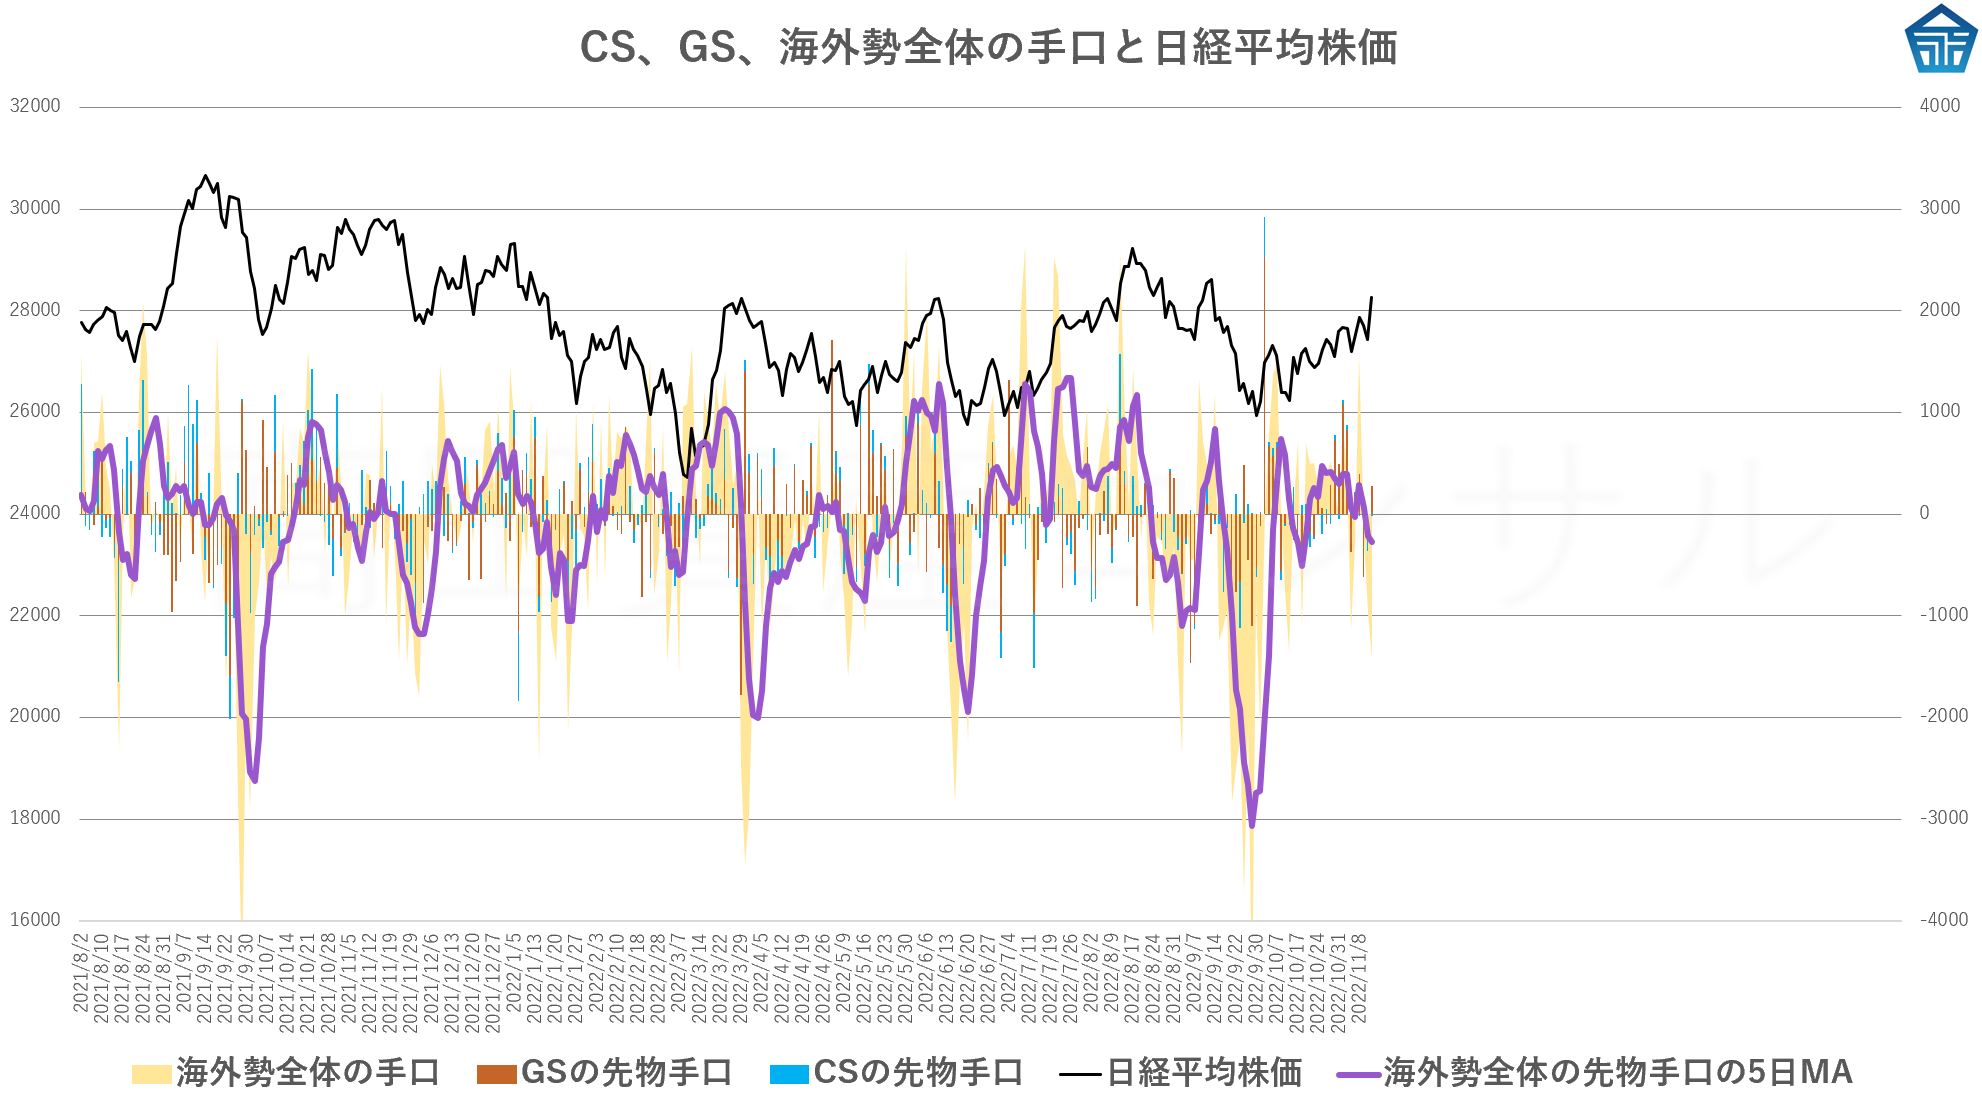 CS、GS、海外勢全体の手口と日経平均株価20221111hihioih778